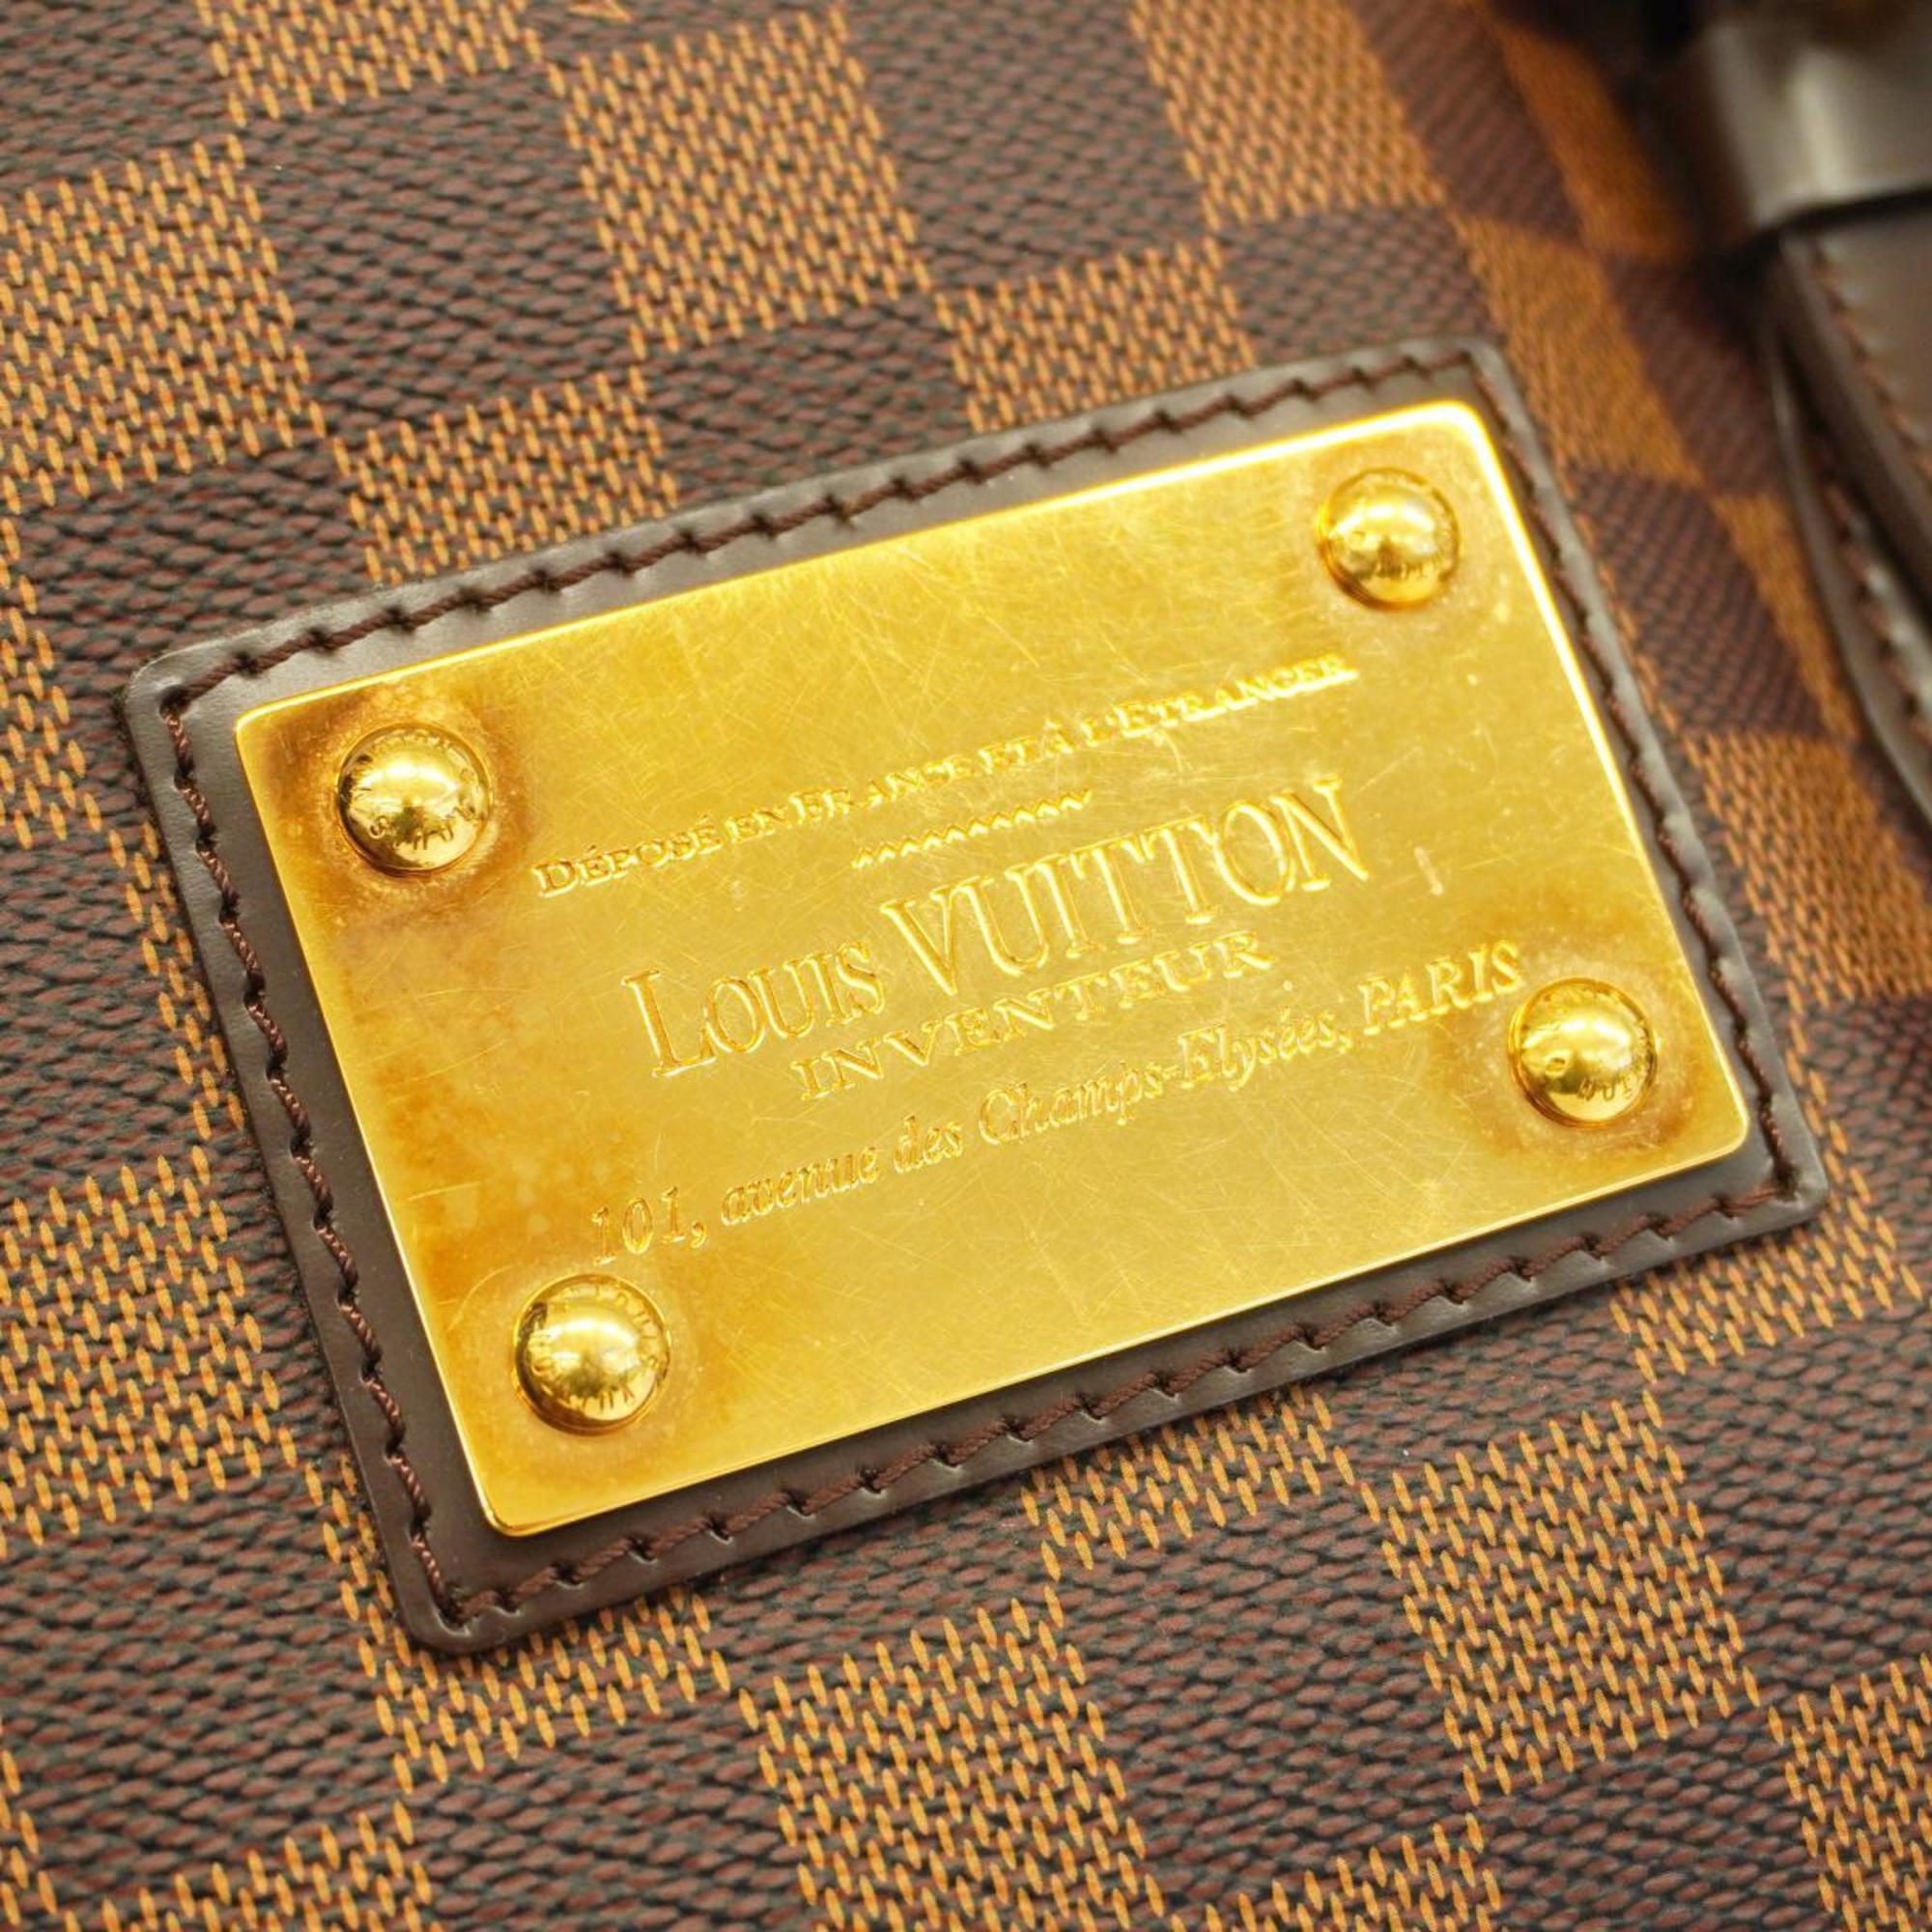 Louis Vuitton Tote Bag Damier Hampstead MM N51204 Ebene Women's